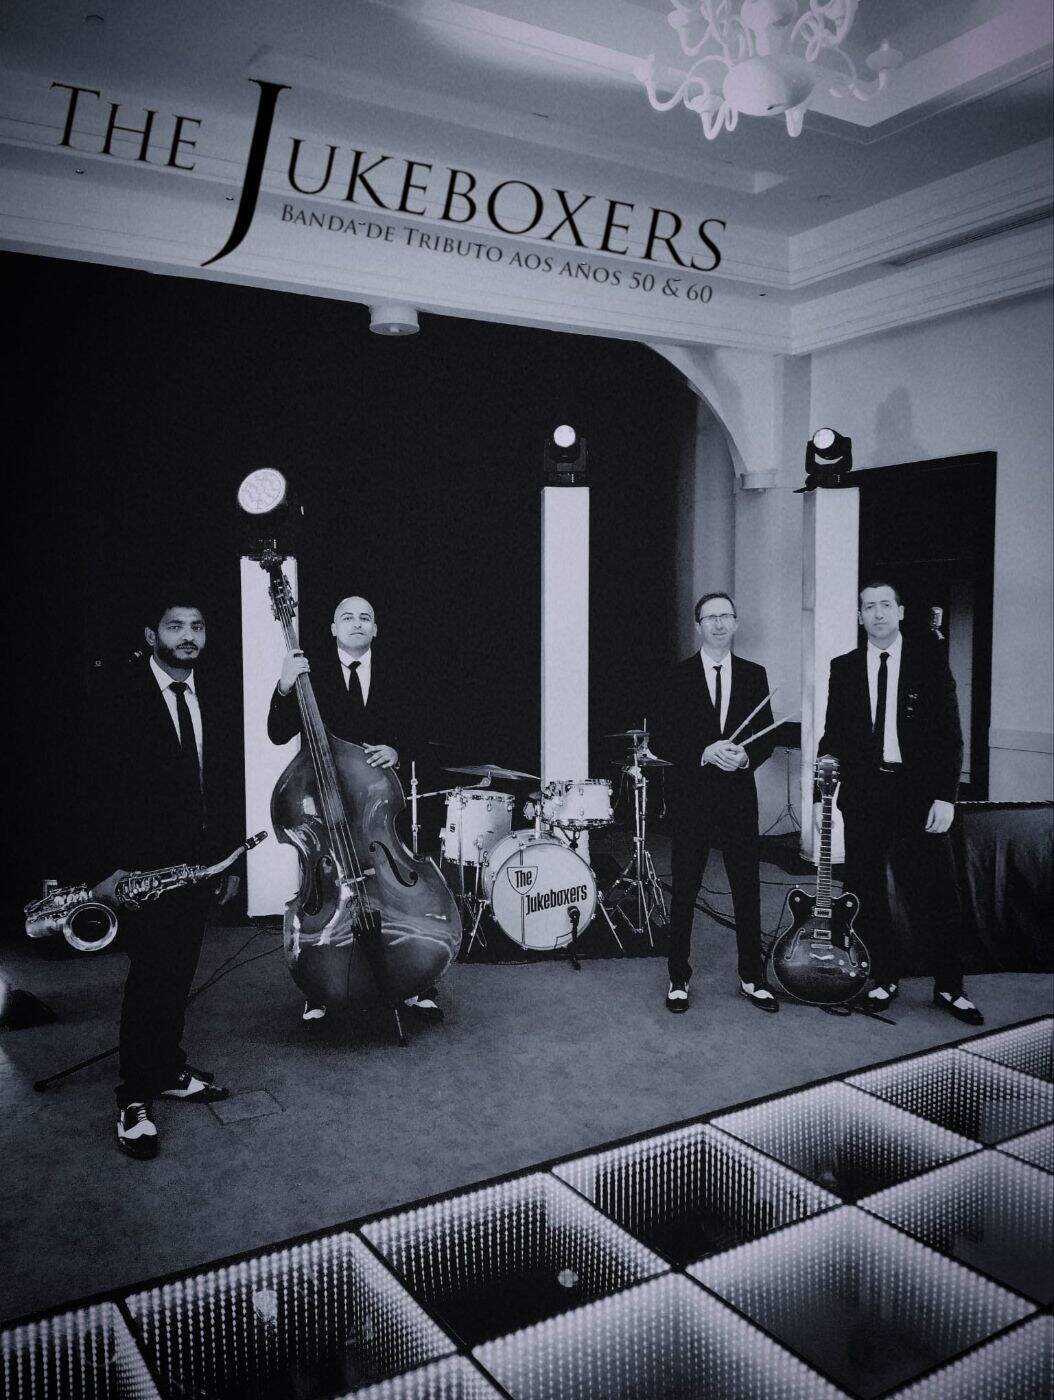 The Jukeboxers - Banda tributo anos 50's & 60's